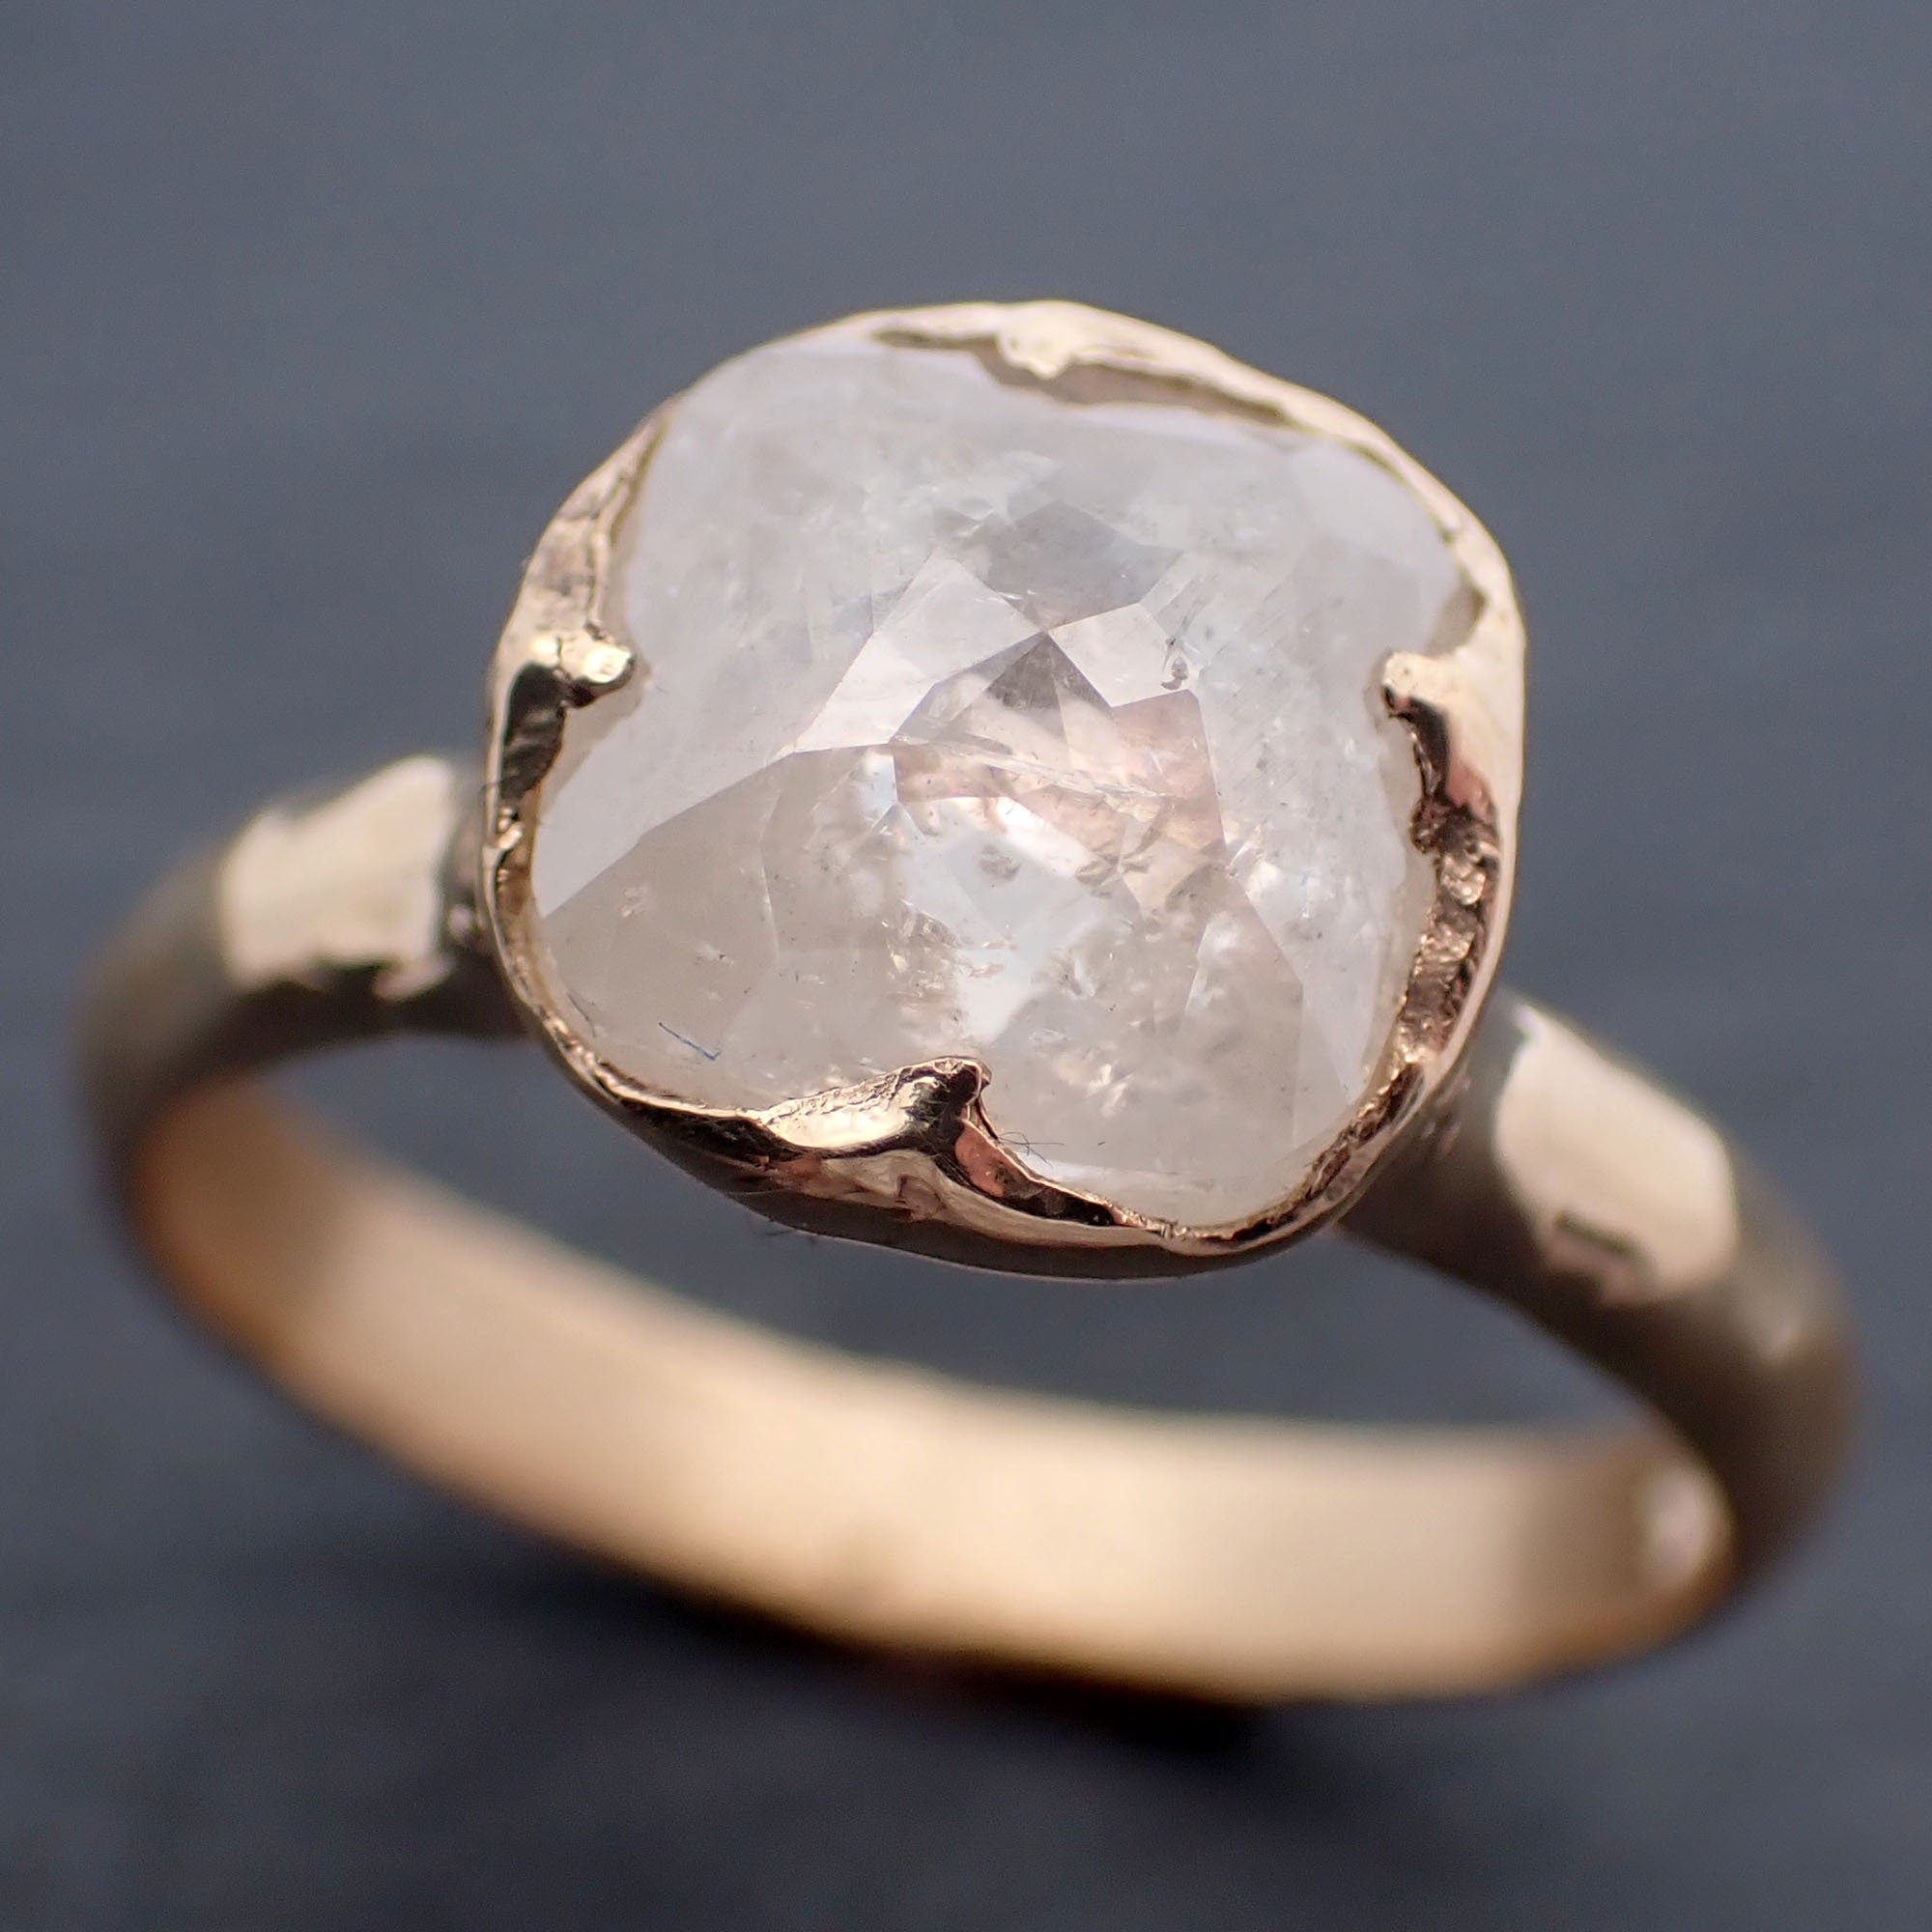 Fancy cut white Diamond Solitaire Engagement 18k yellow Gold Wedding Ring byAngeline 3281